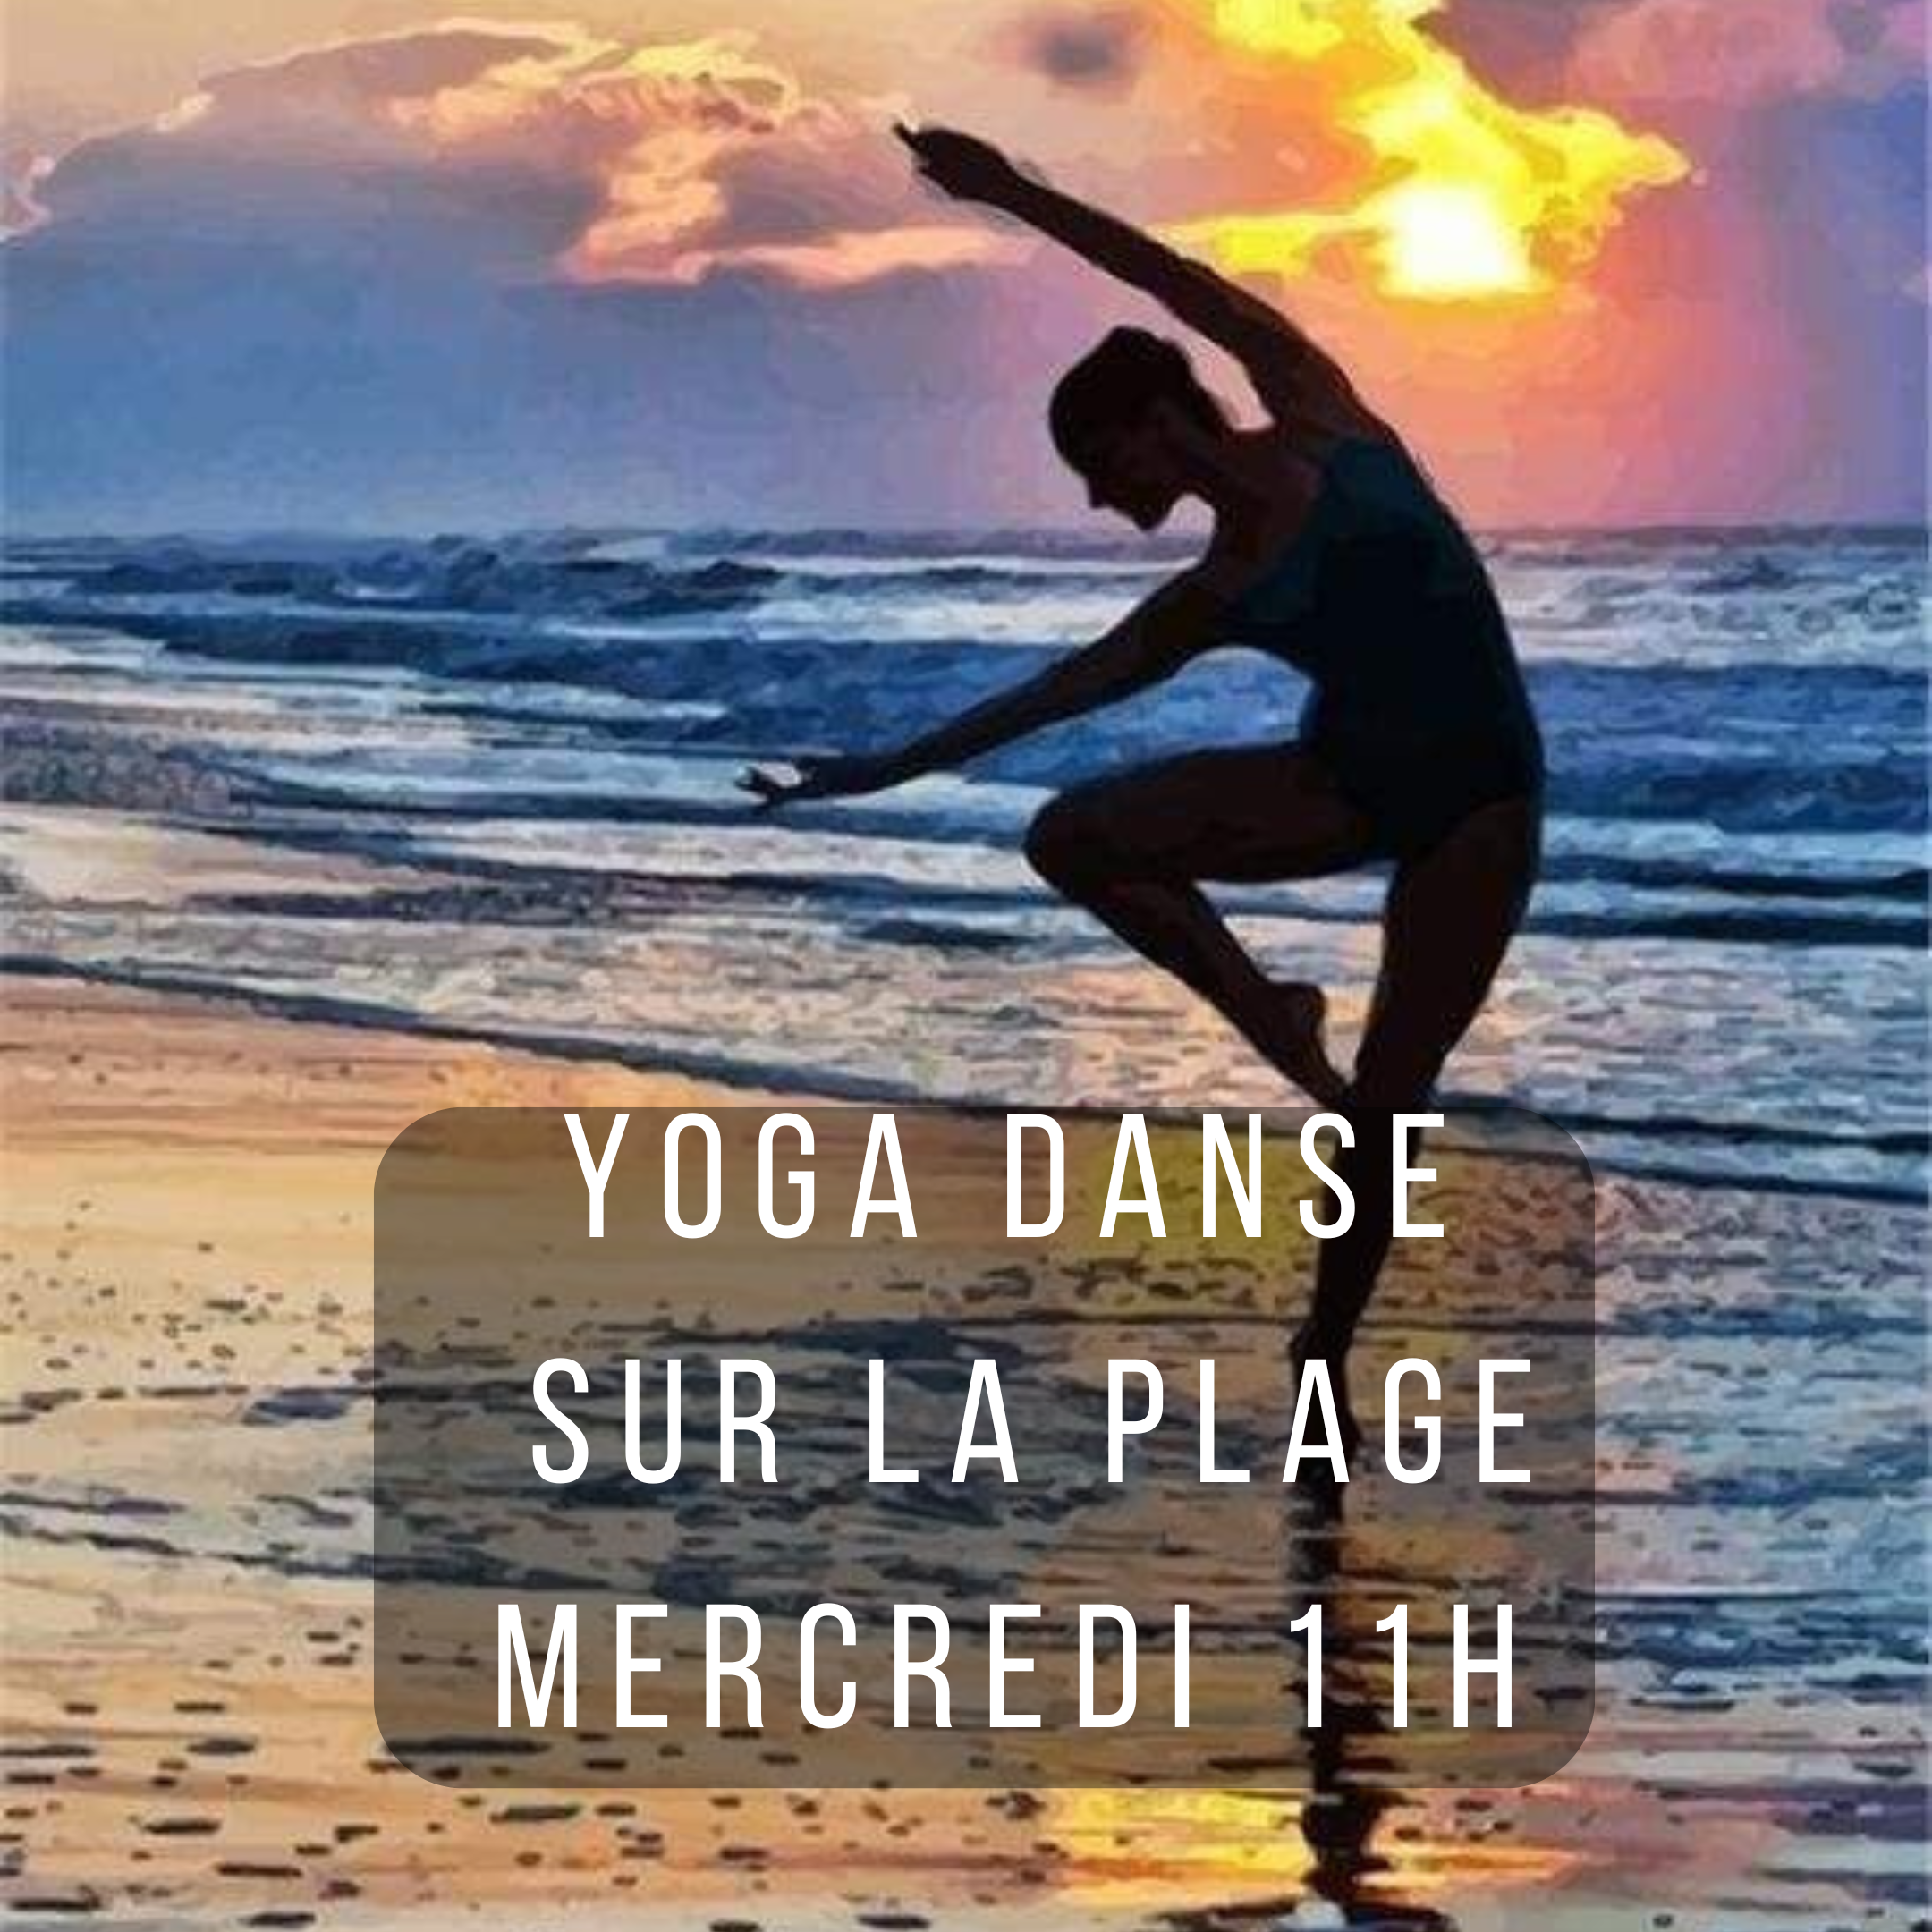 Yoga danse sur la plage Mercredi 11h (10/07)